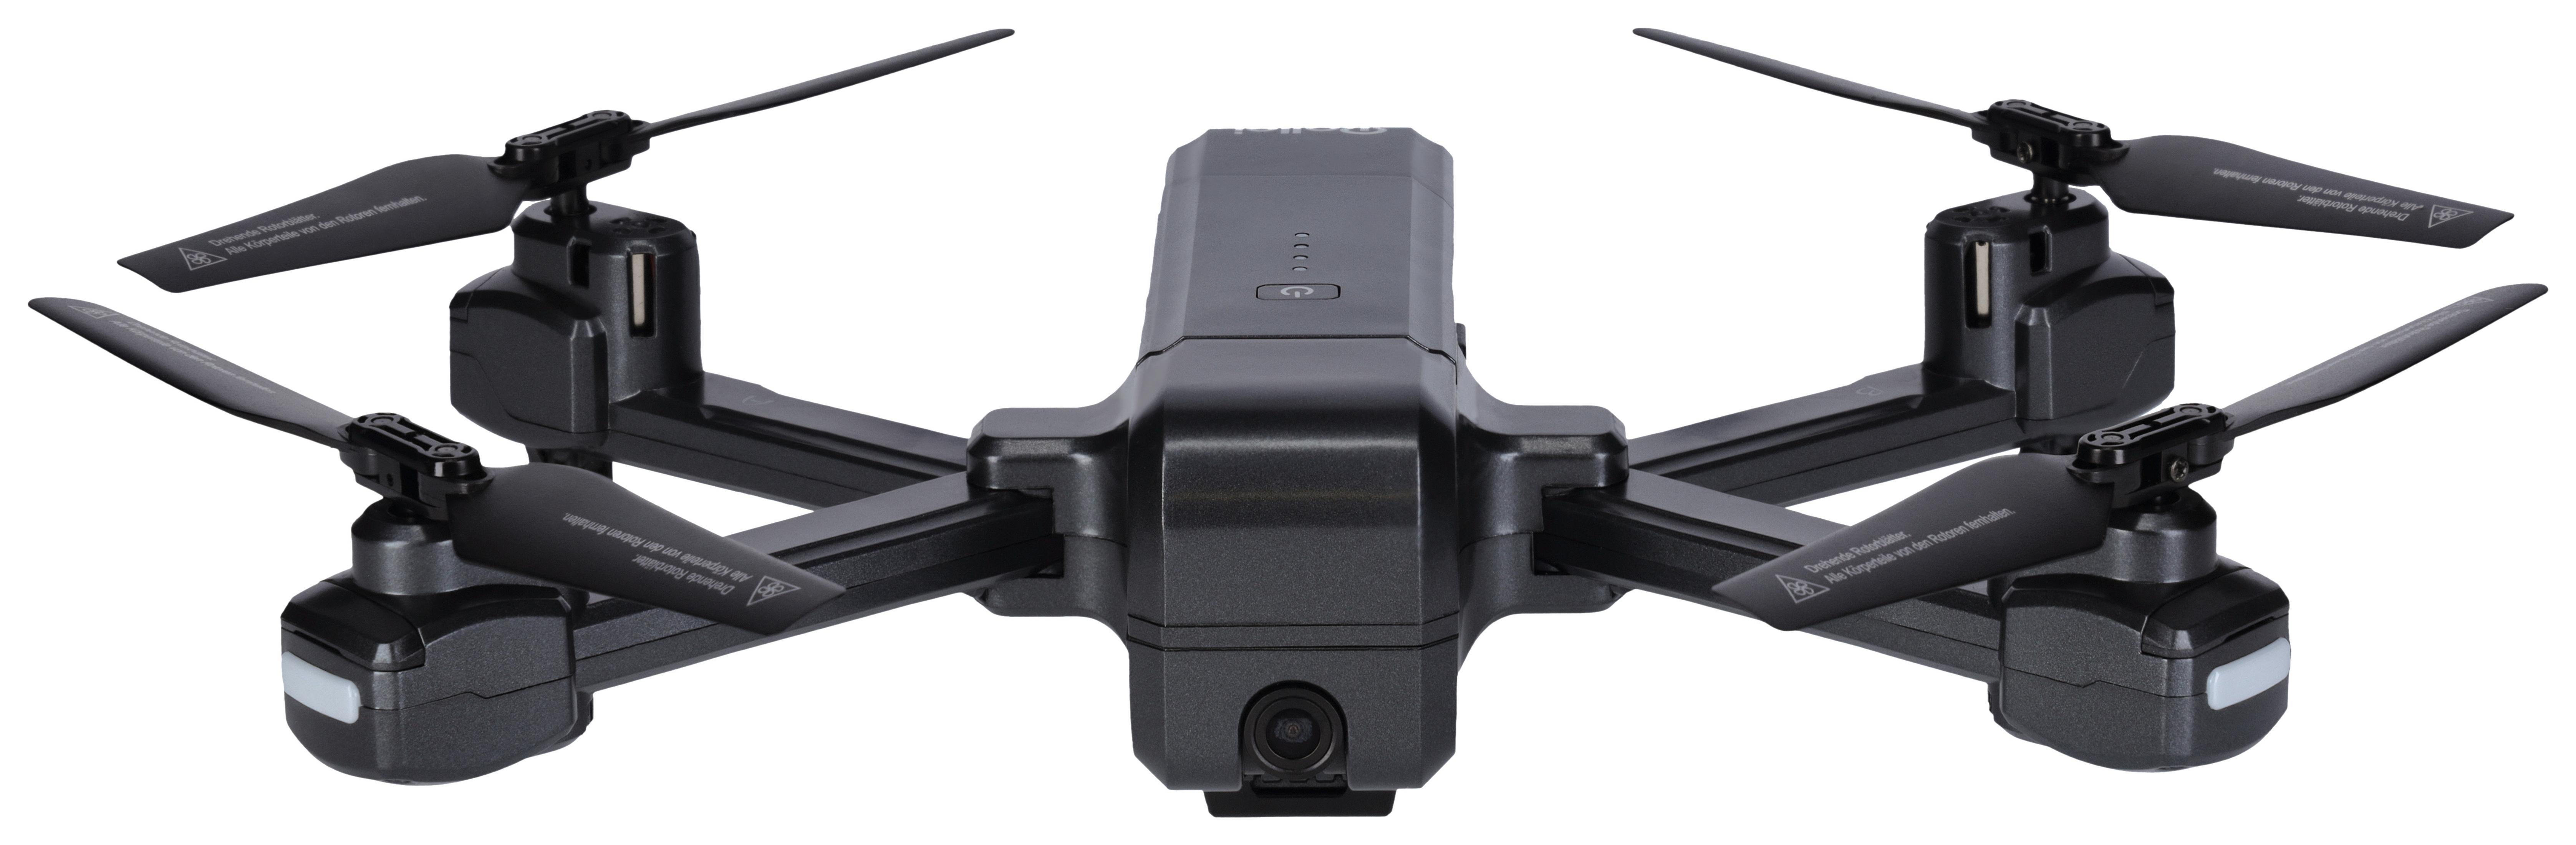 ROLLEI 35102 FLY faltbare Drohne mit 100PRO GPS, Schwarz